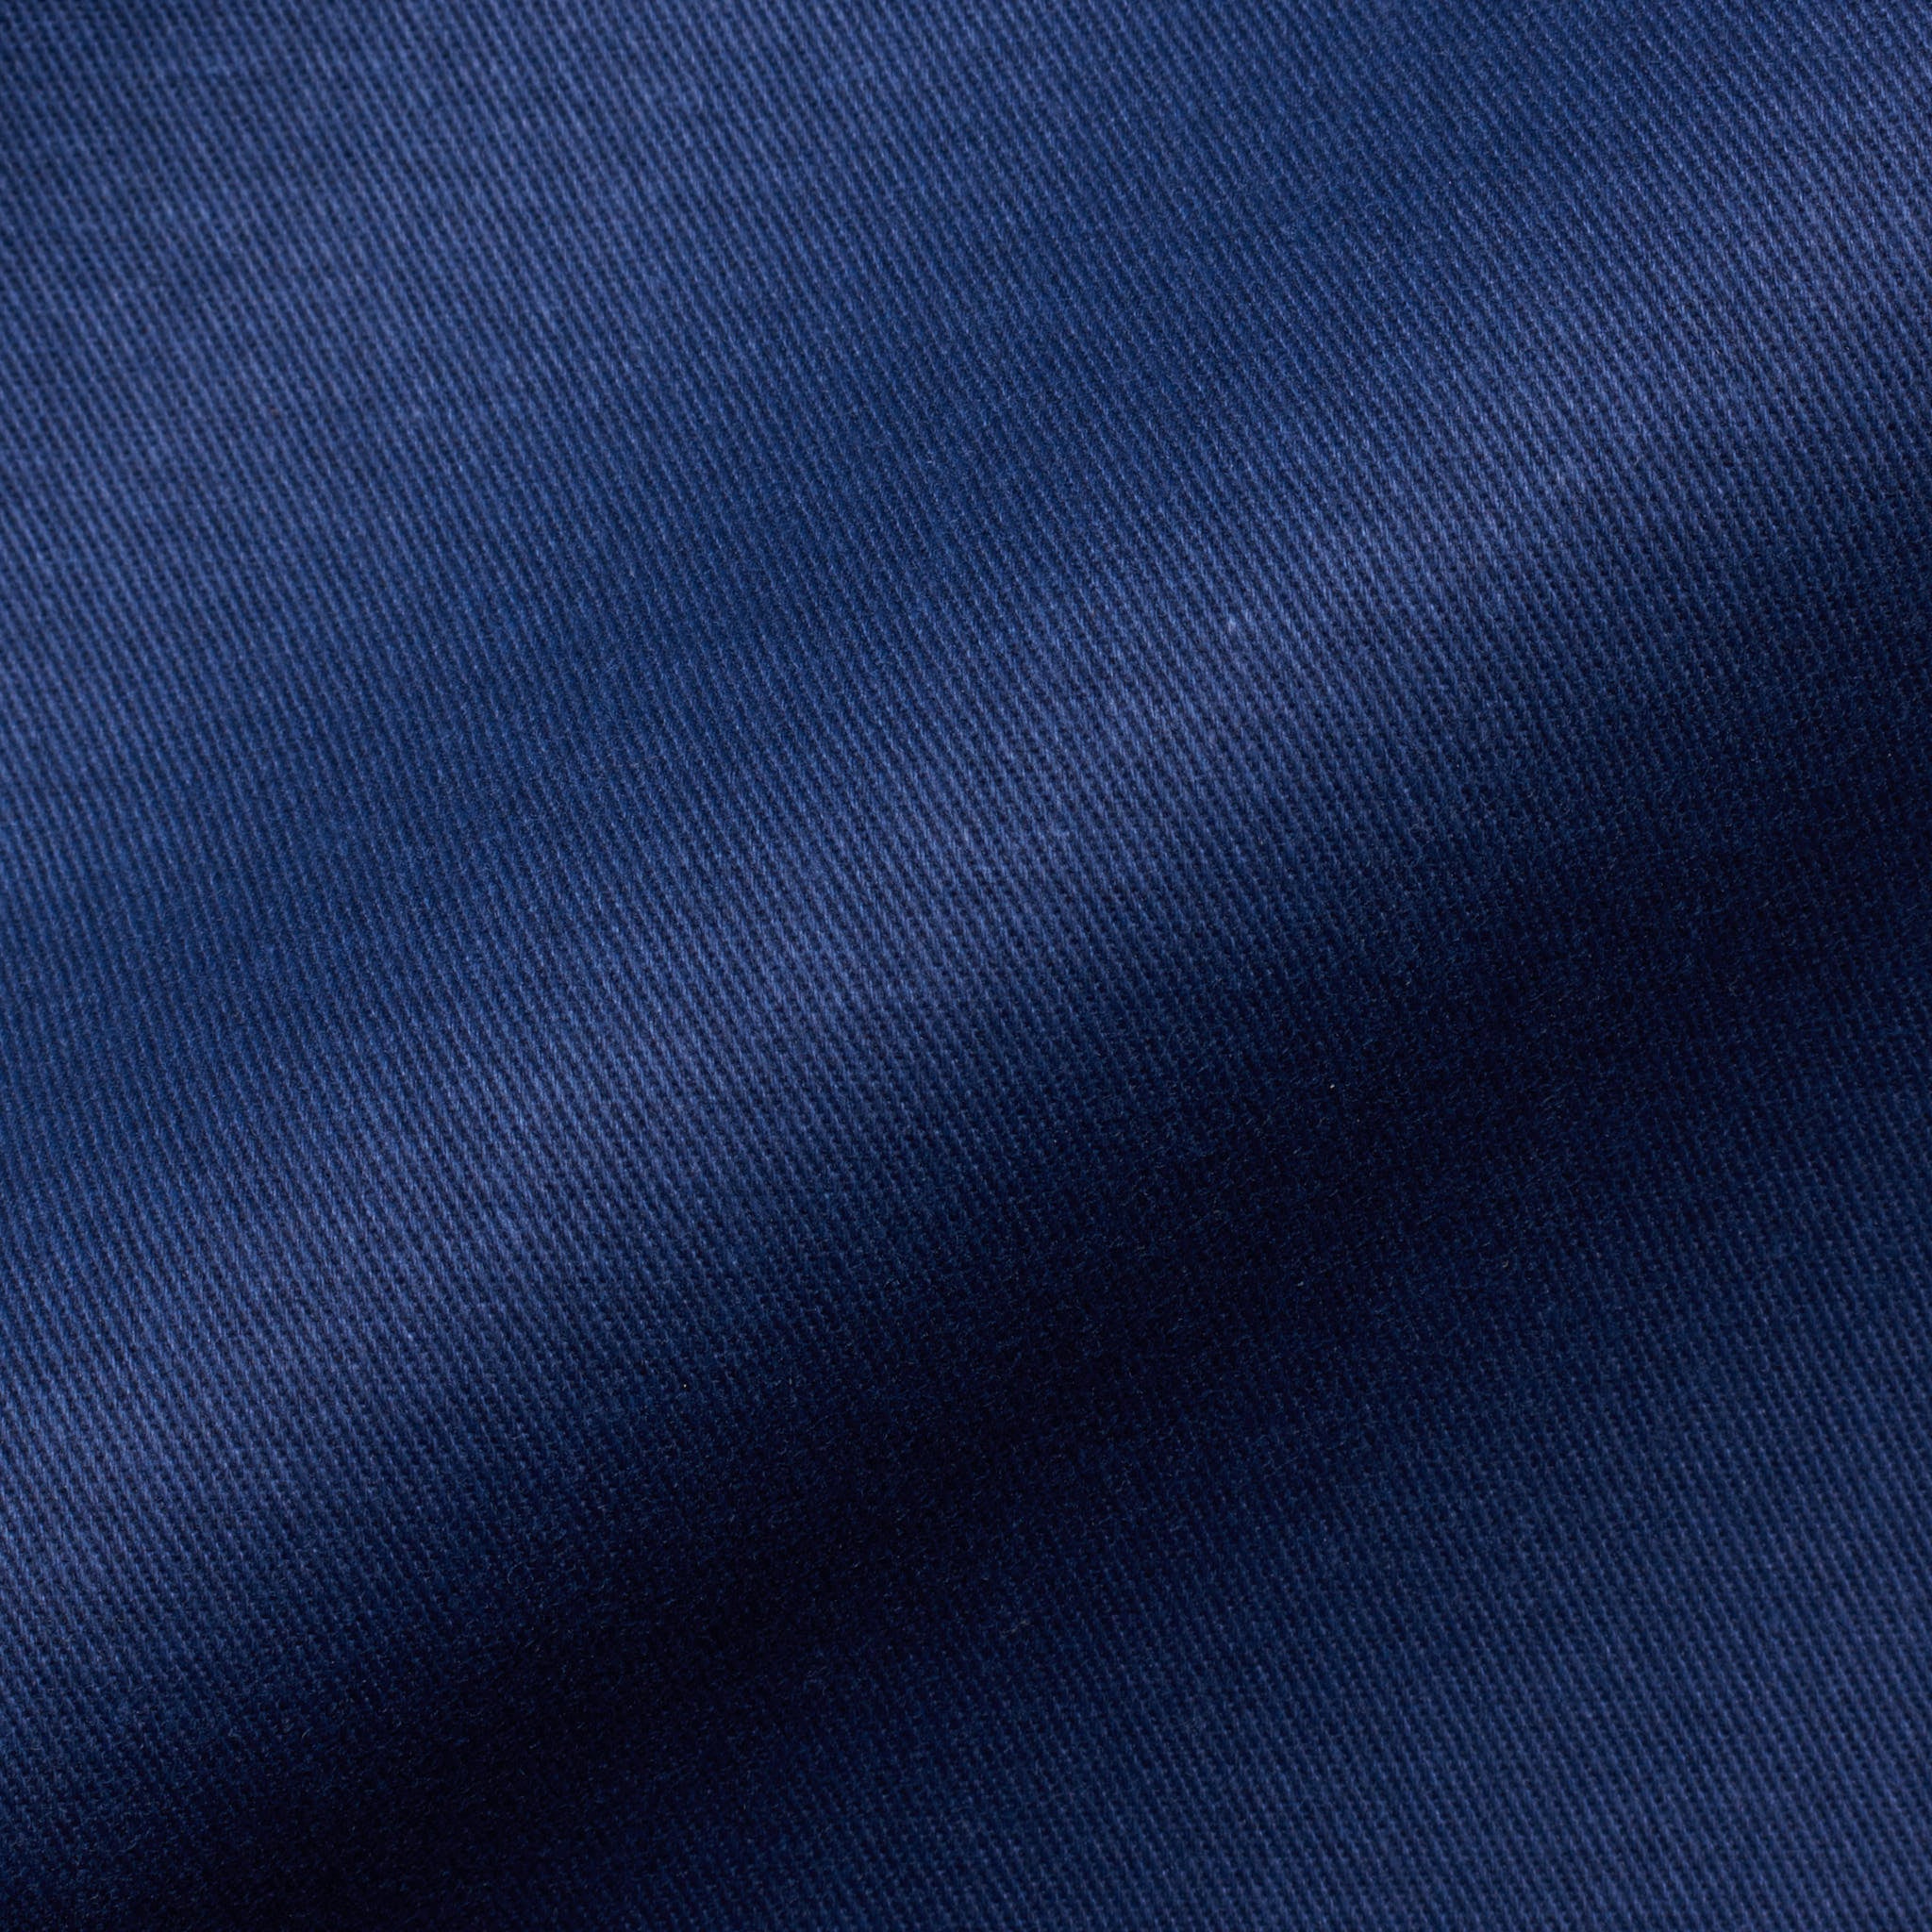 RUBINACCI Napoli Blue Cotton Jeans Pants EU 46 NEW US 30 Straight Classic Fit